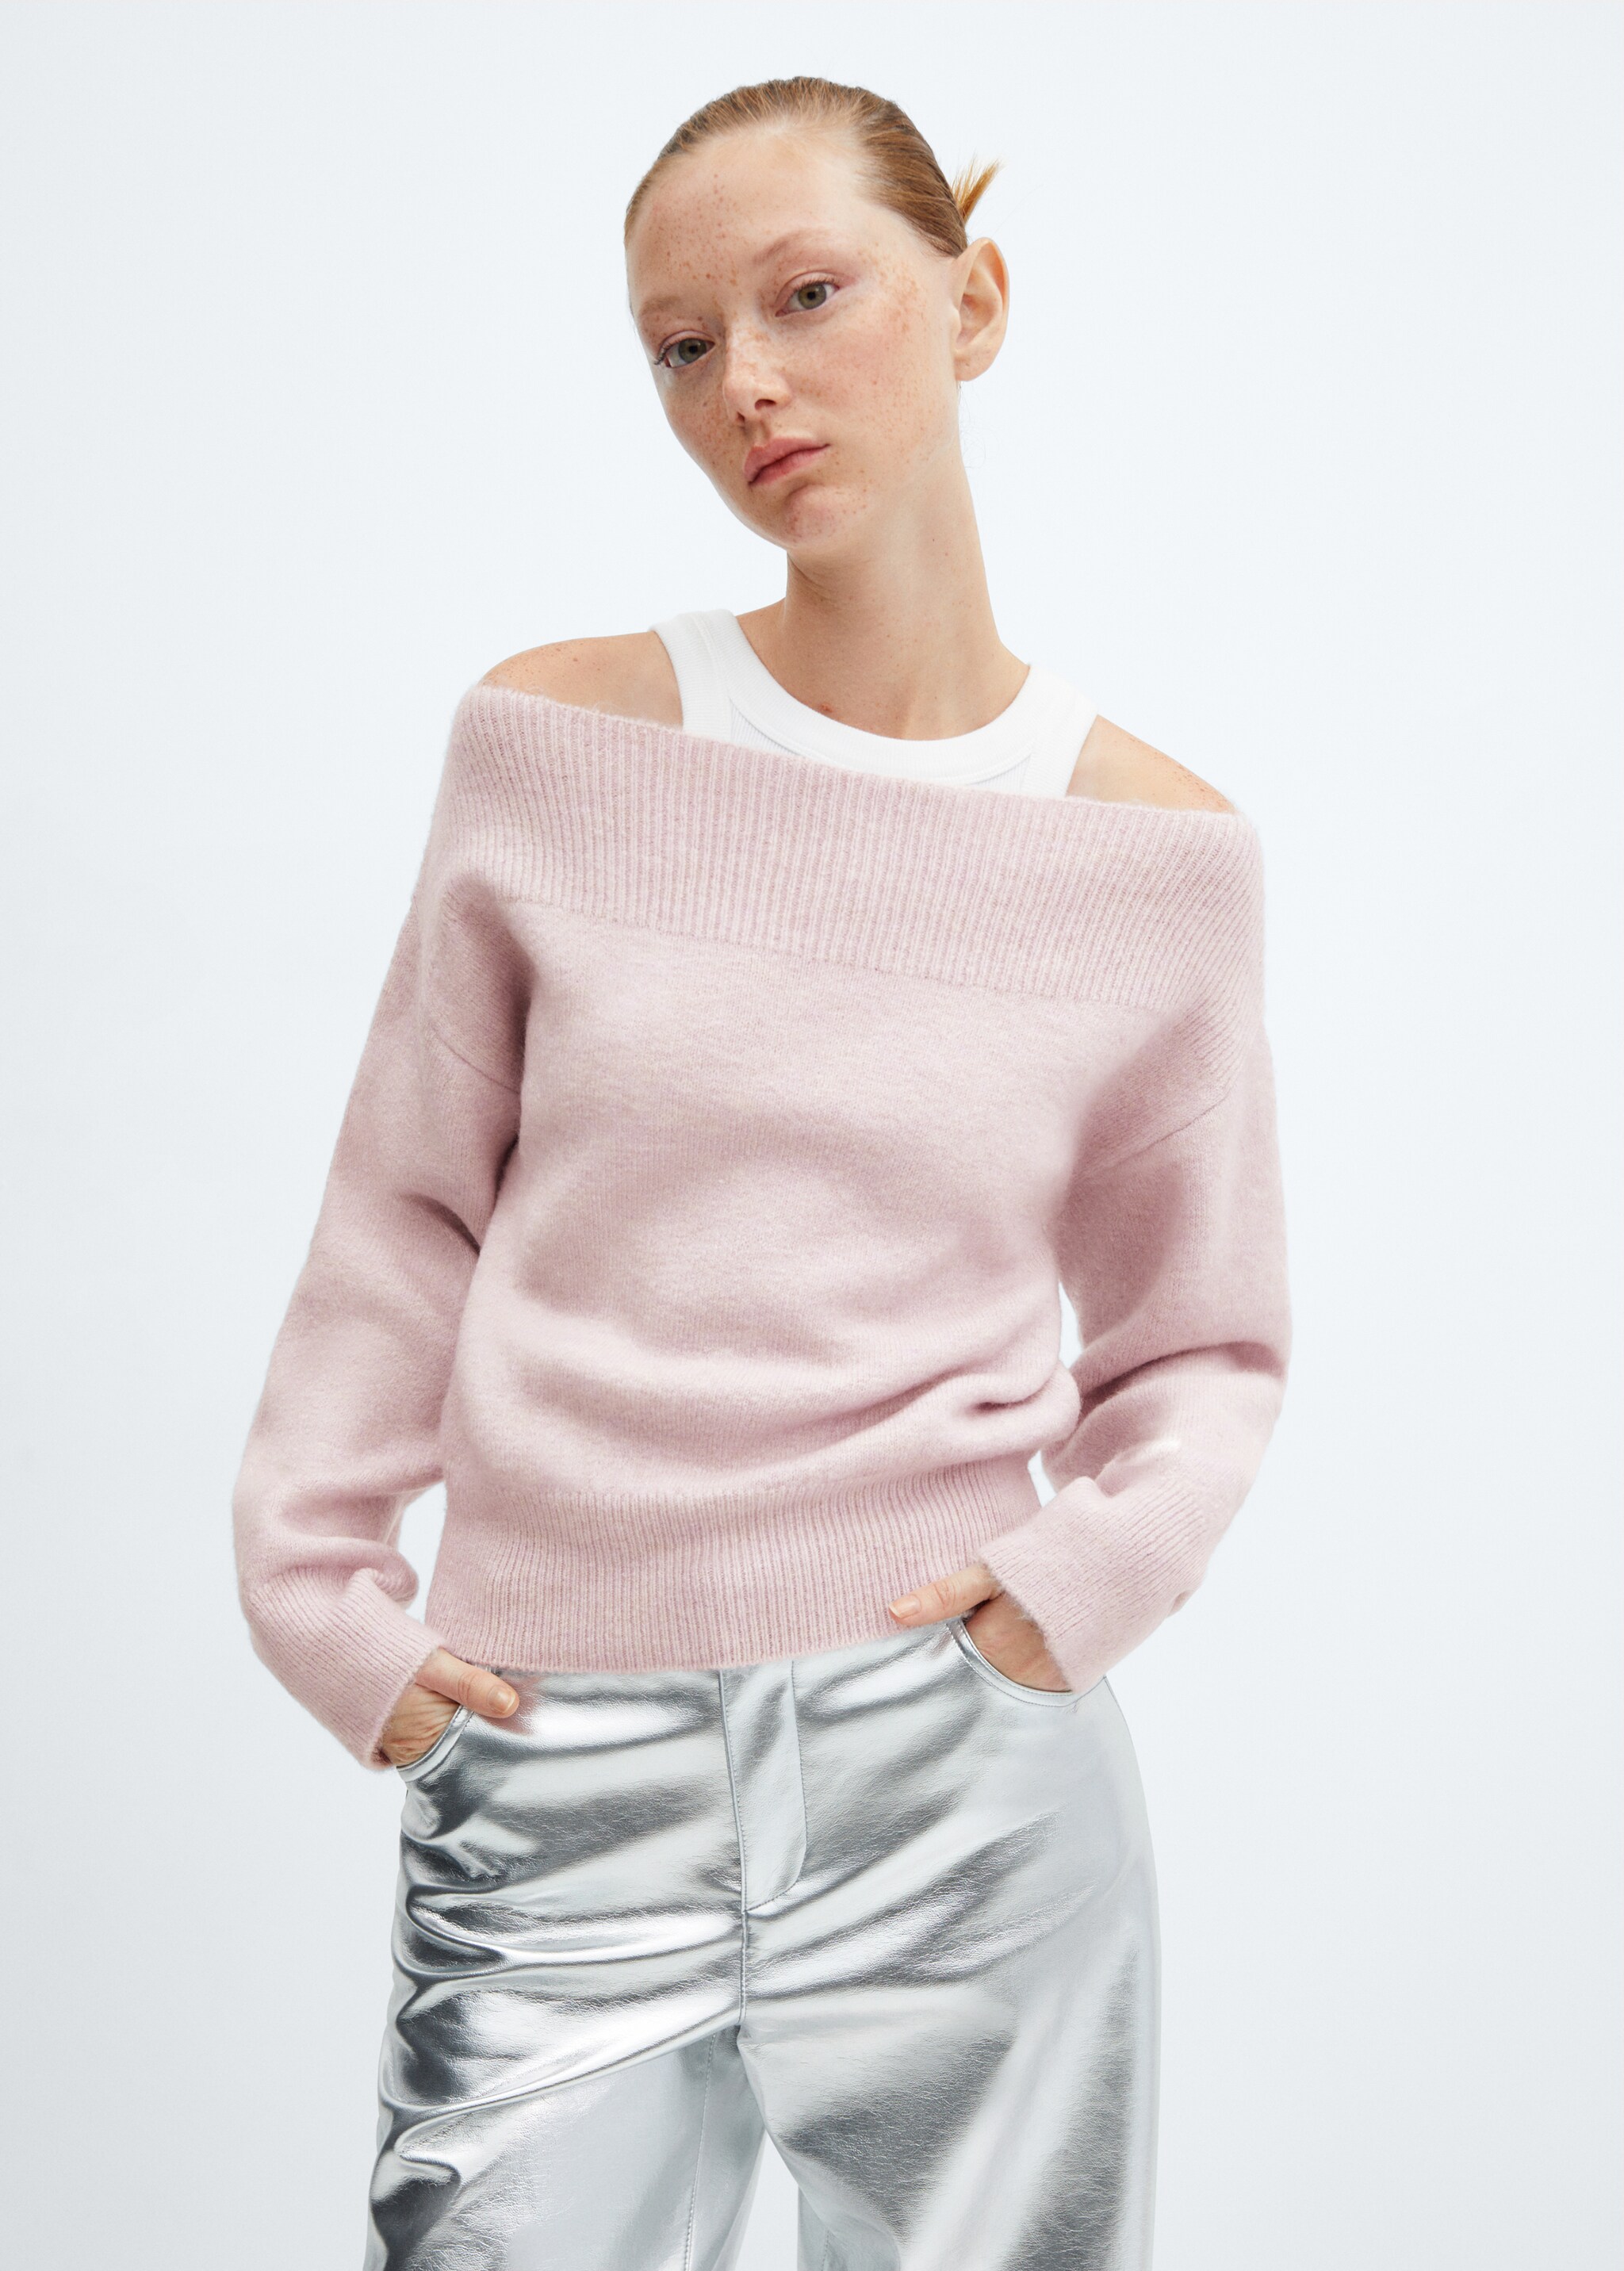 Boat-neck knitted sweater - Medium plane